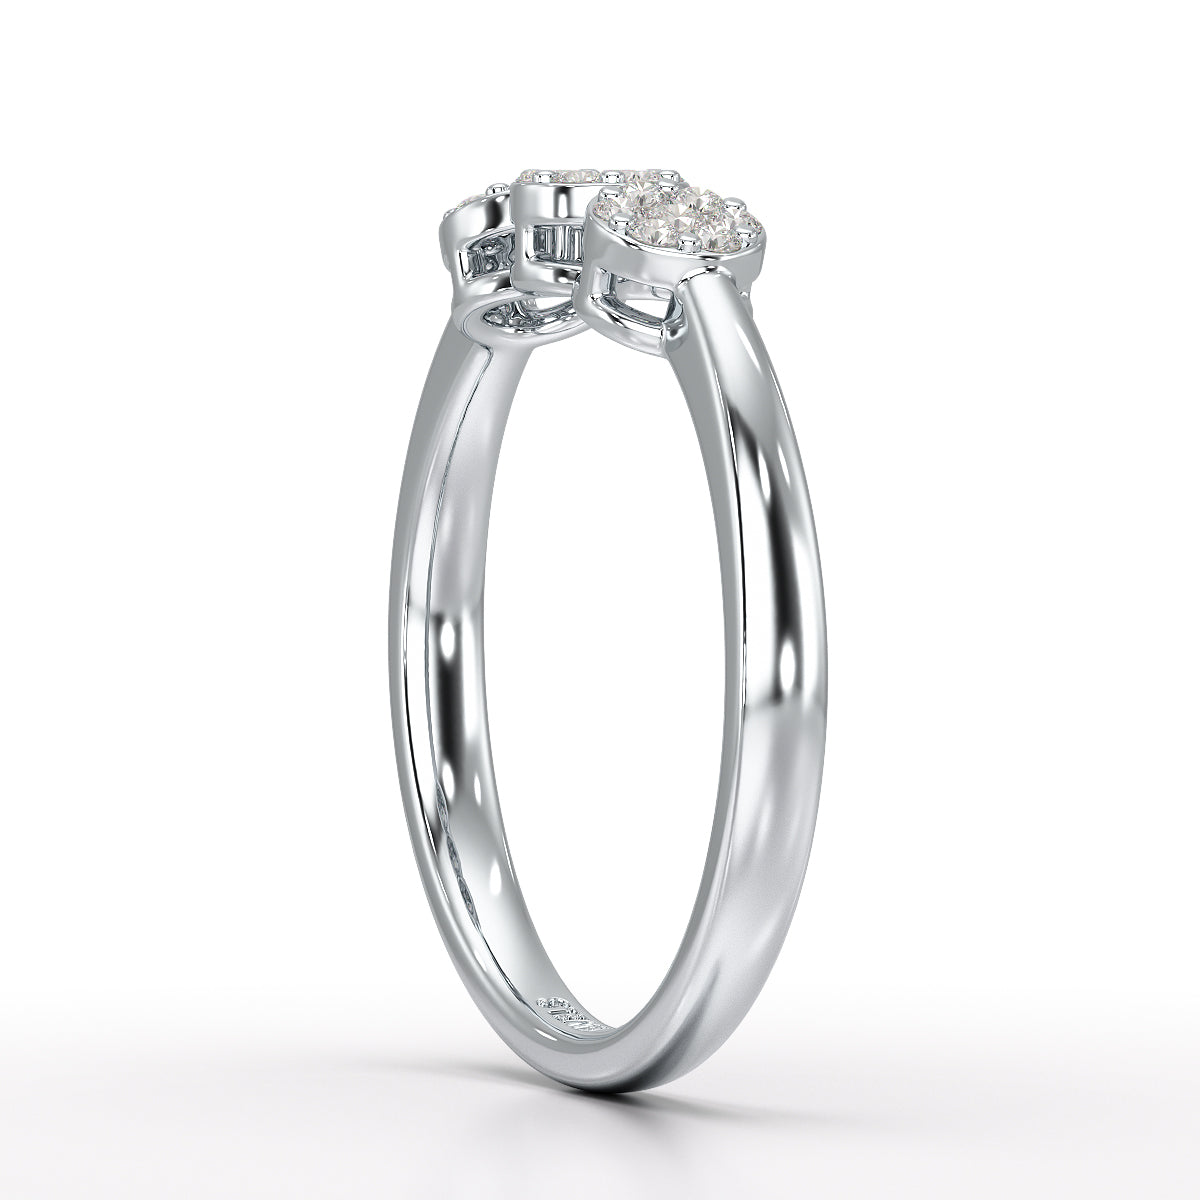 0.21 CT Round Shape Lab Diamonds Engagement Ring